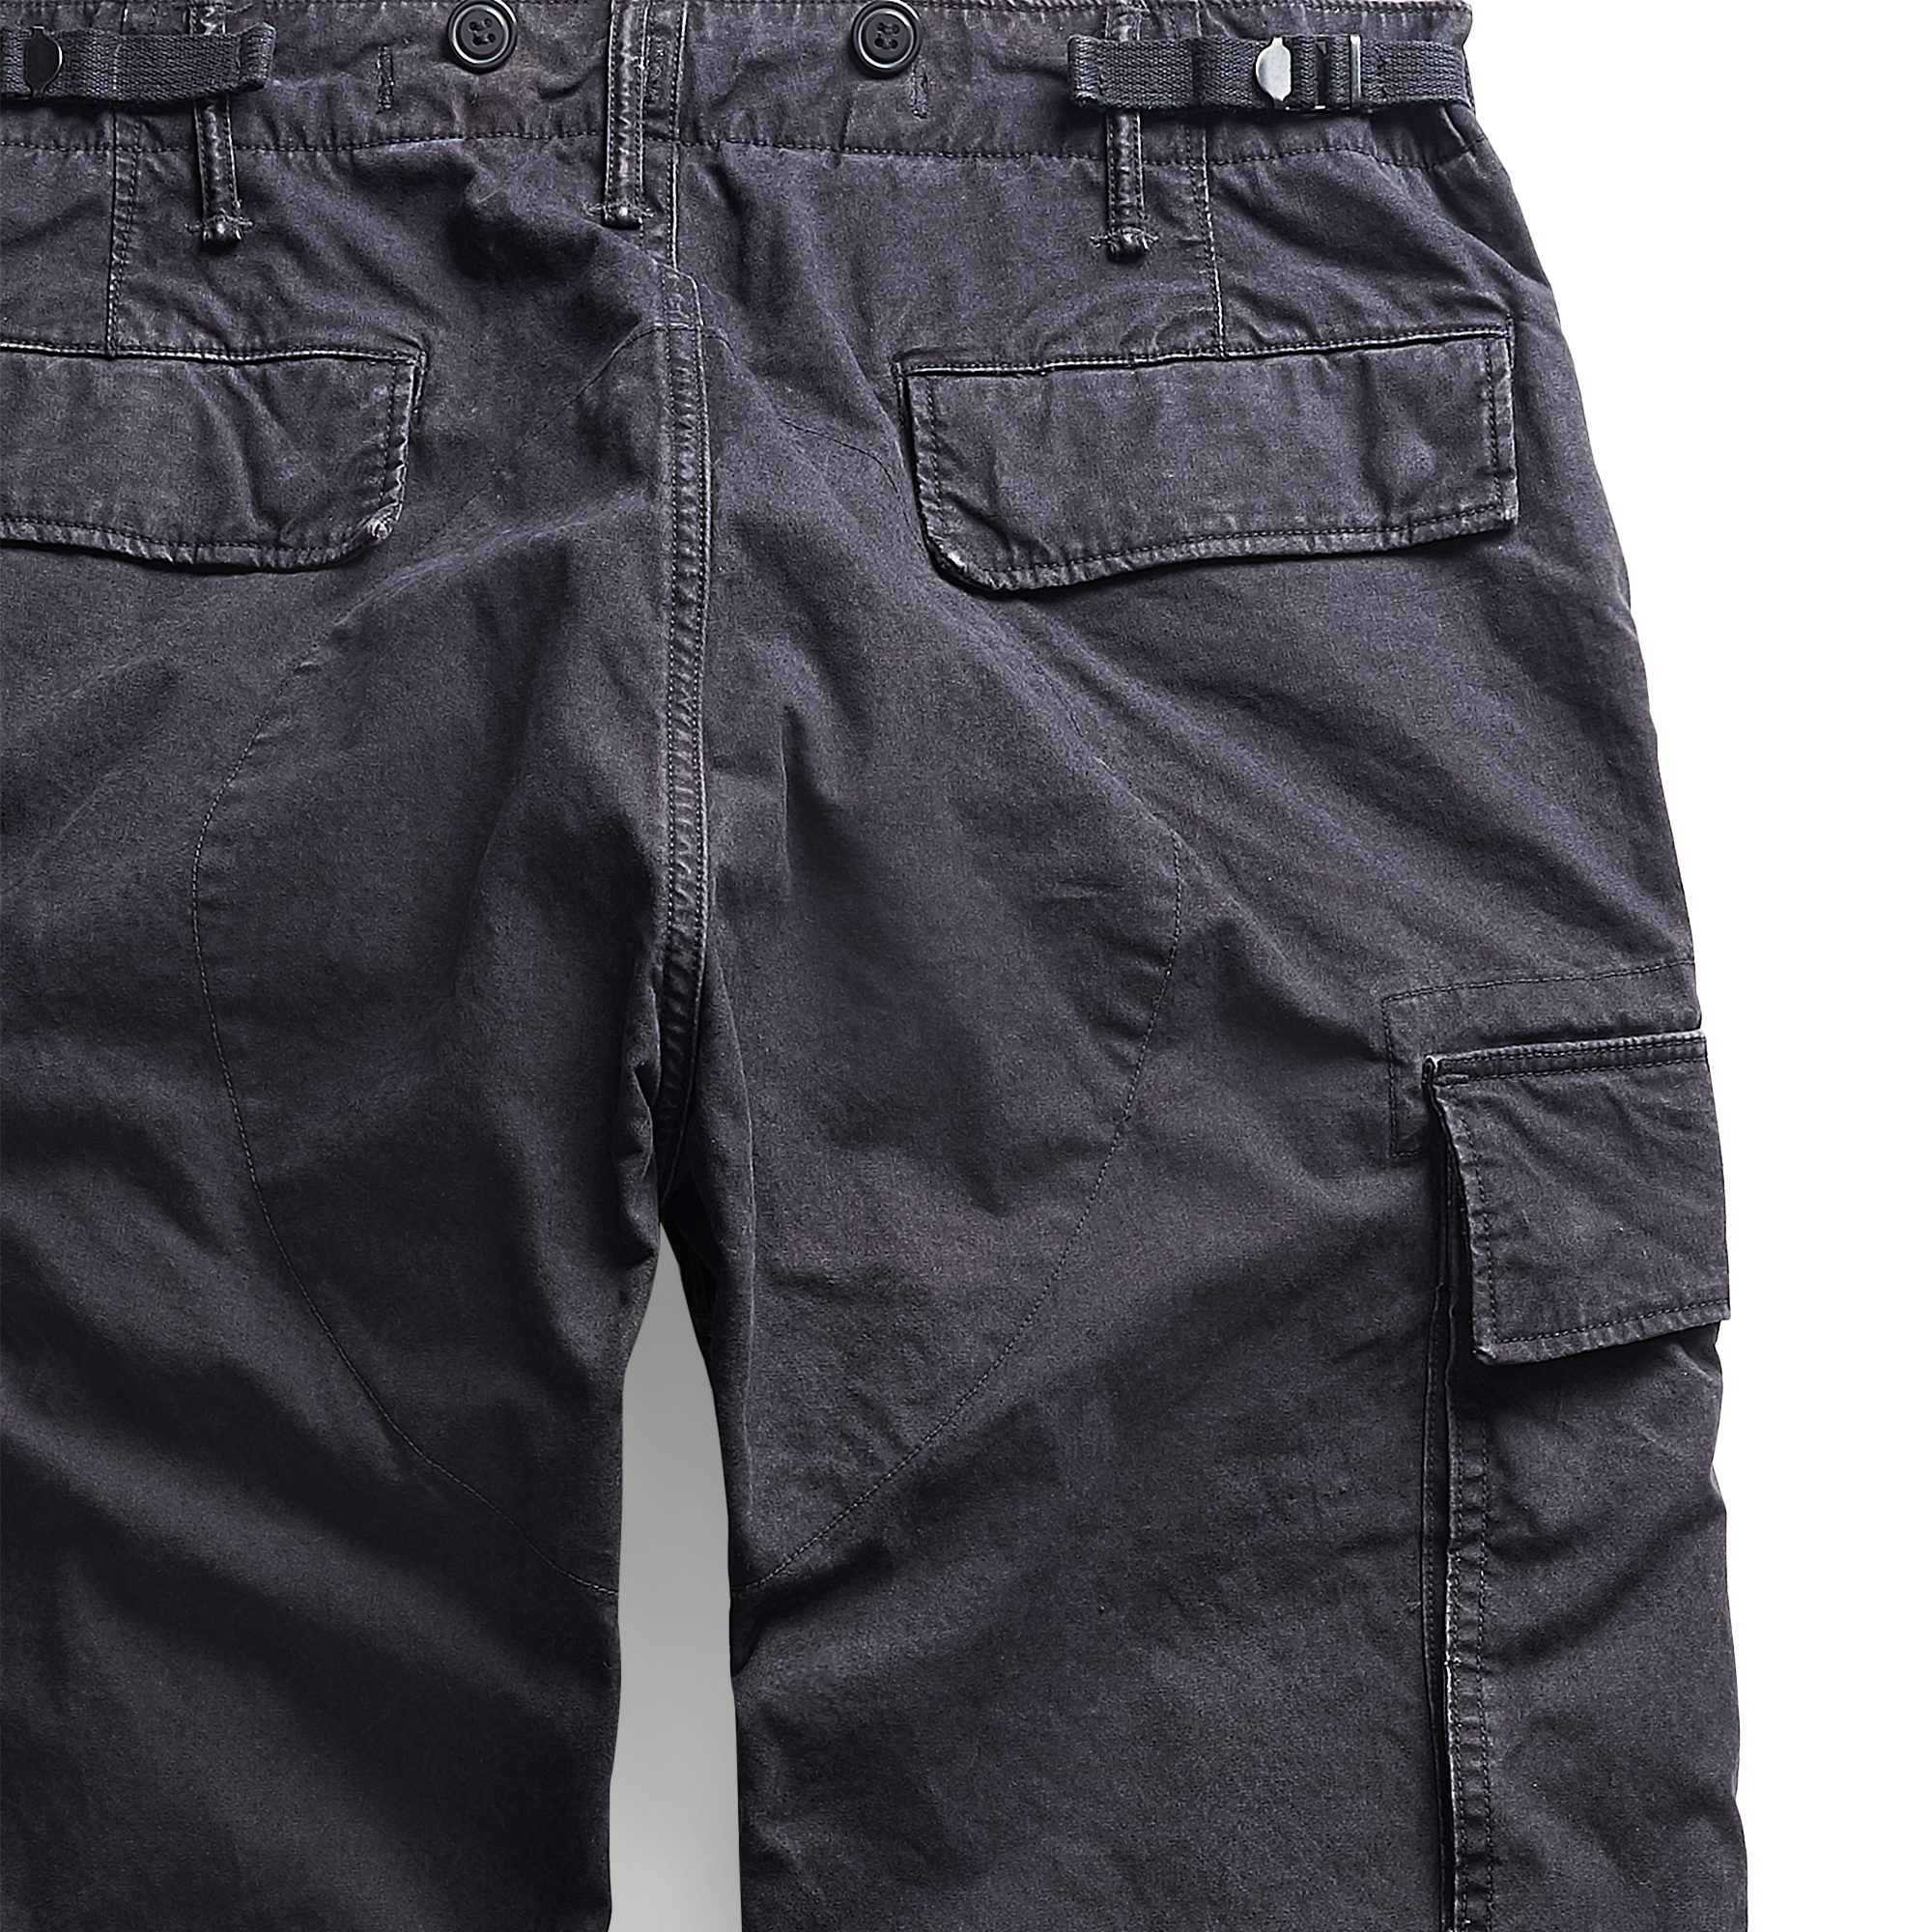 POLO RALPH LAUREN Men's Utility Surplus Chino Cargo Shorts Classic Fit Flat  Front (Large, Khaki) | Amazon.com